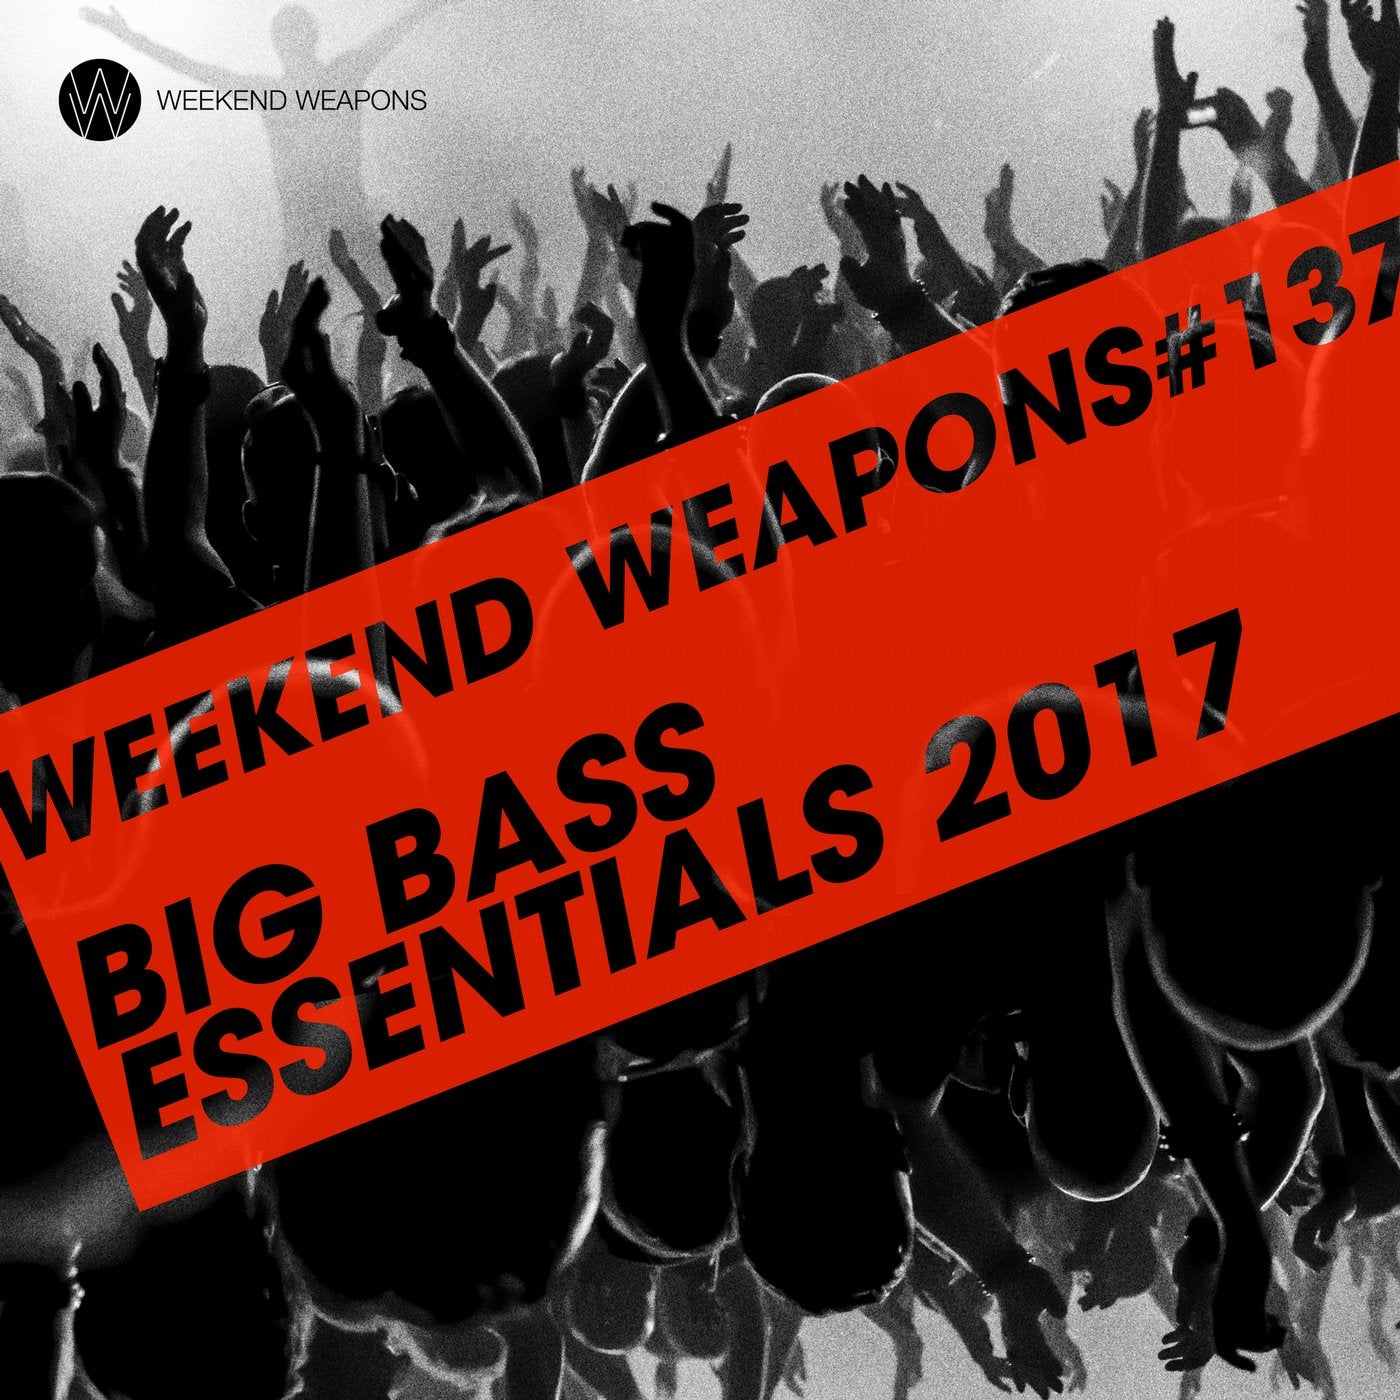 Big Bass Essentials 2017